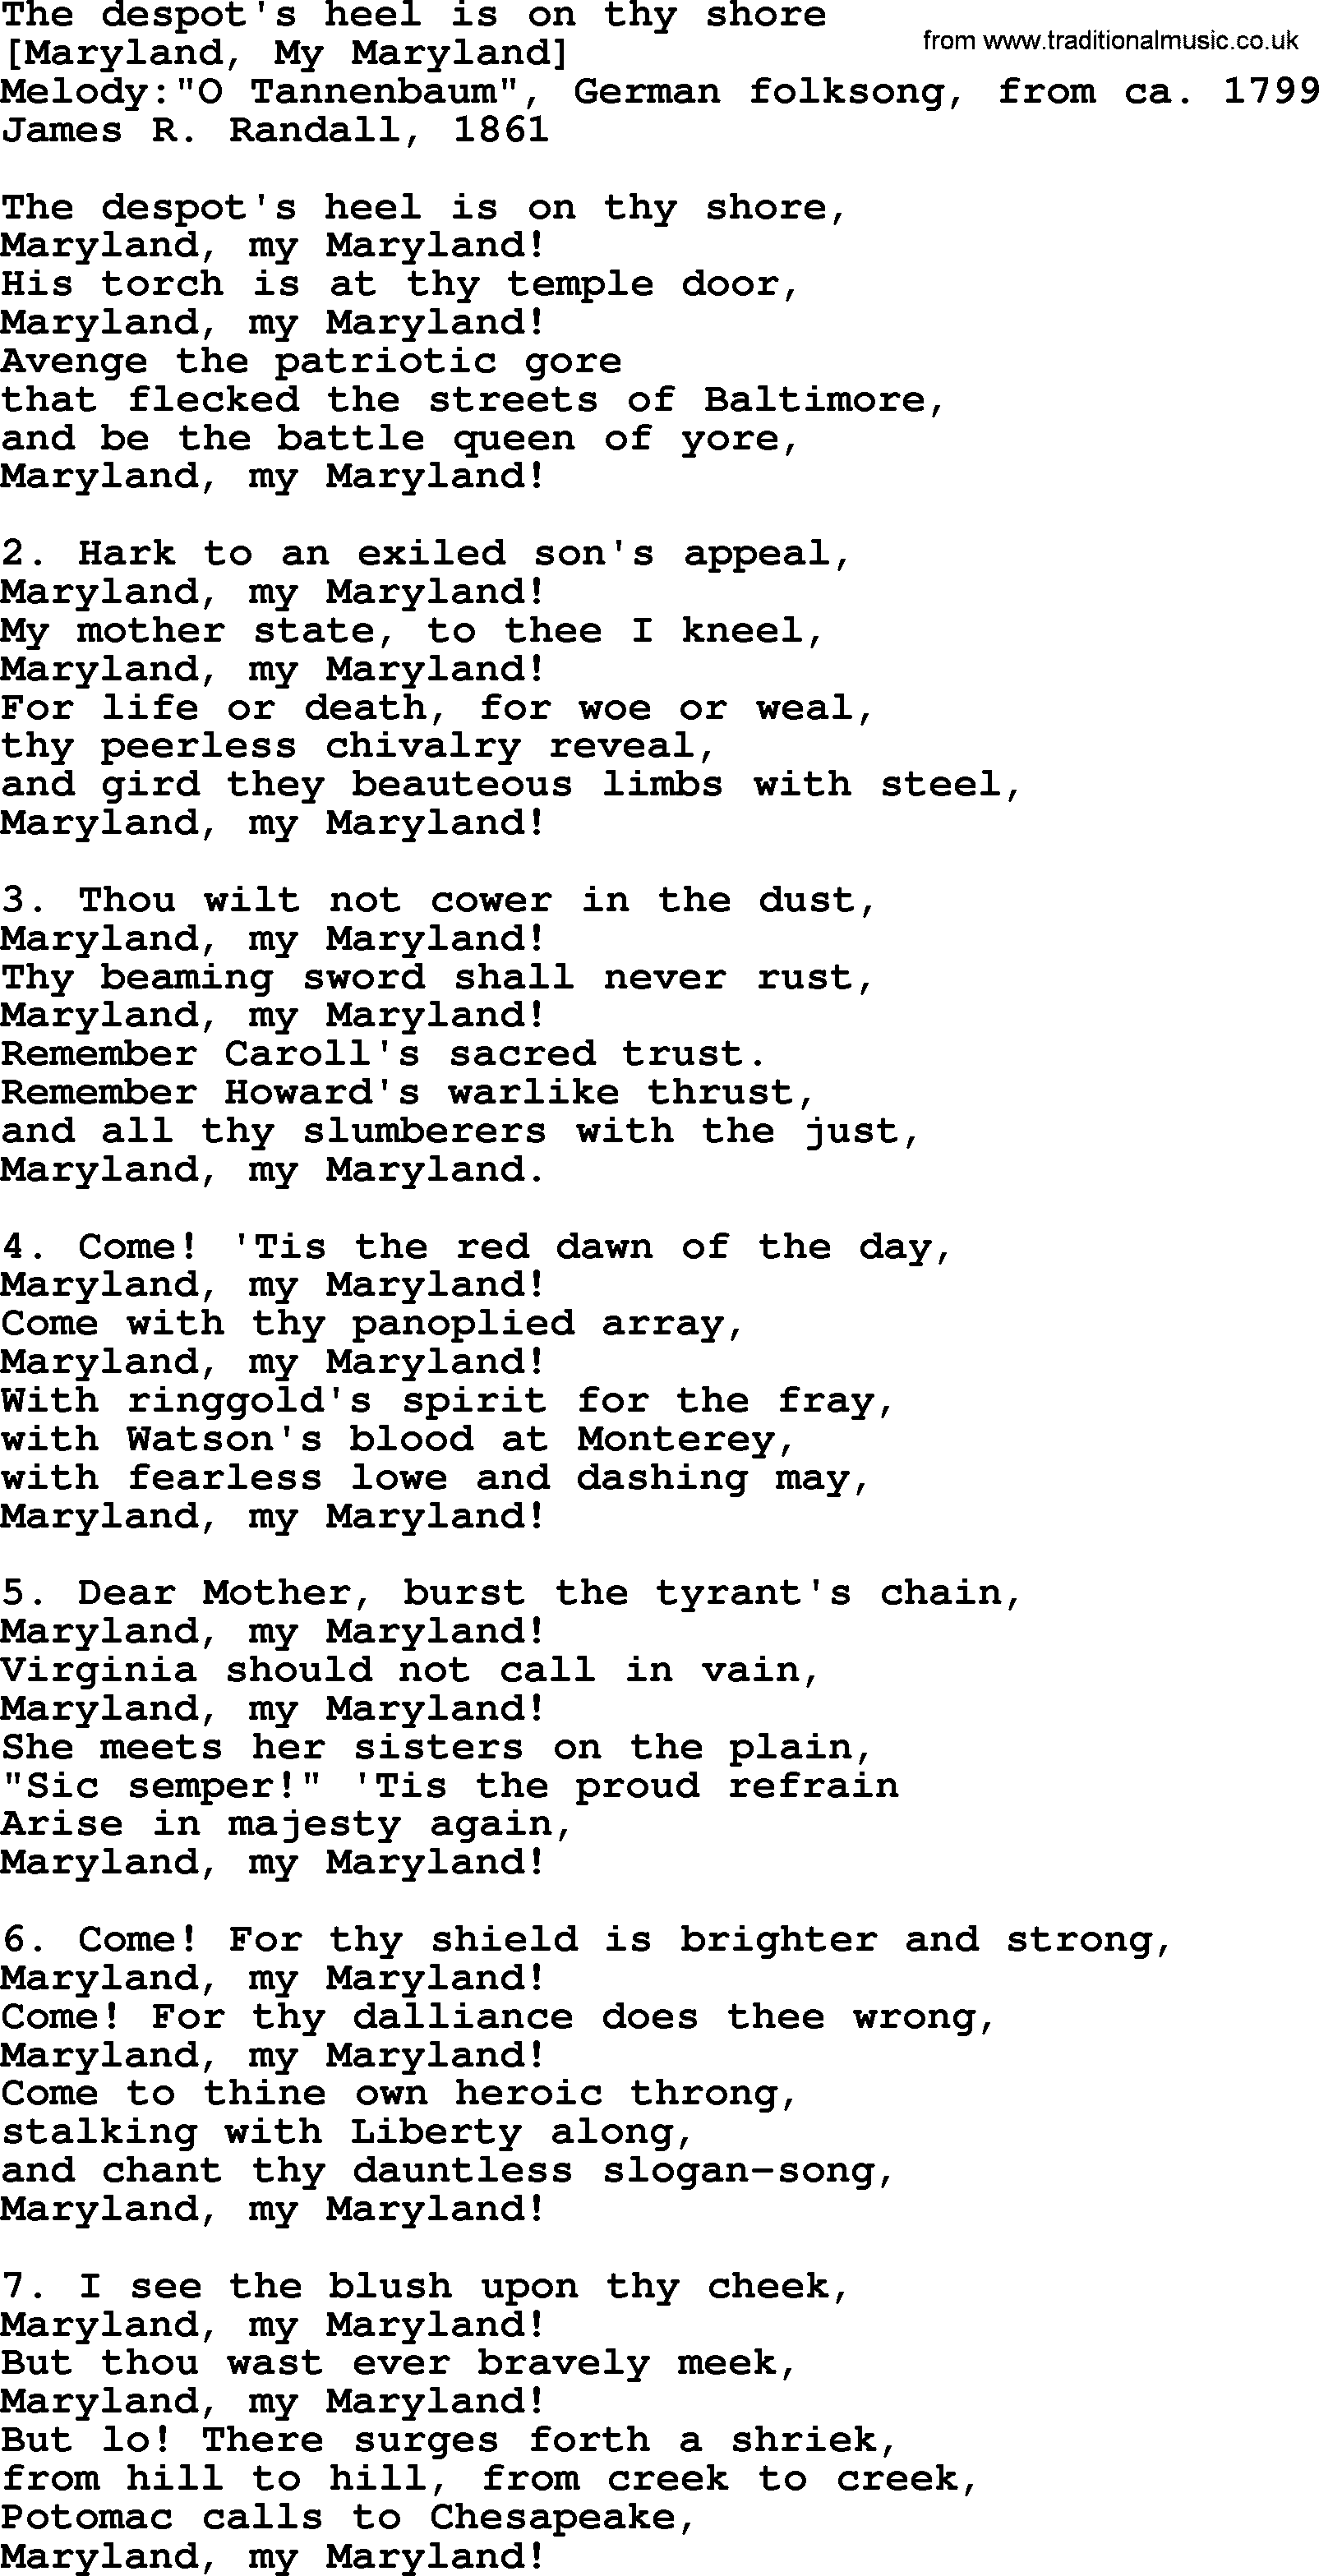 Old American Song: The Despot's Heel Is On Thy Shore, lyrics